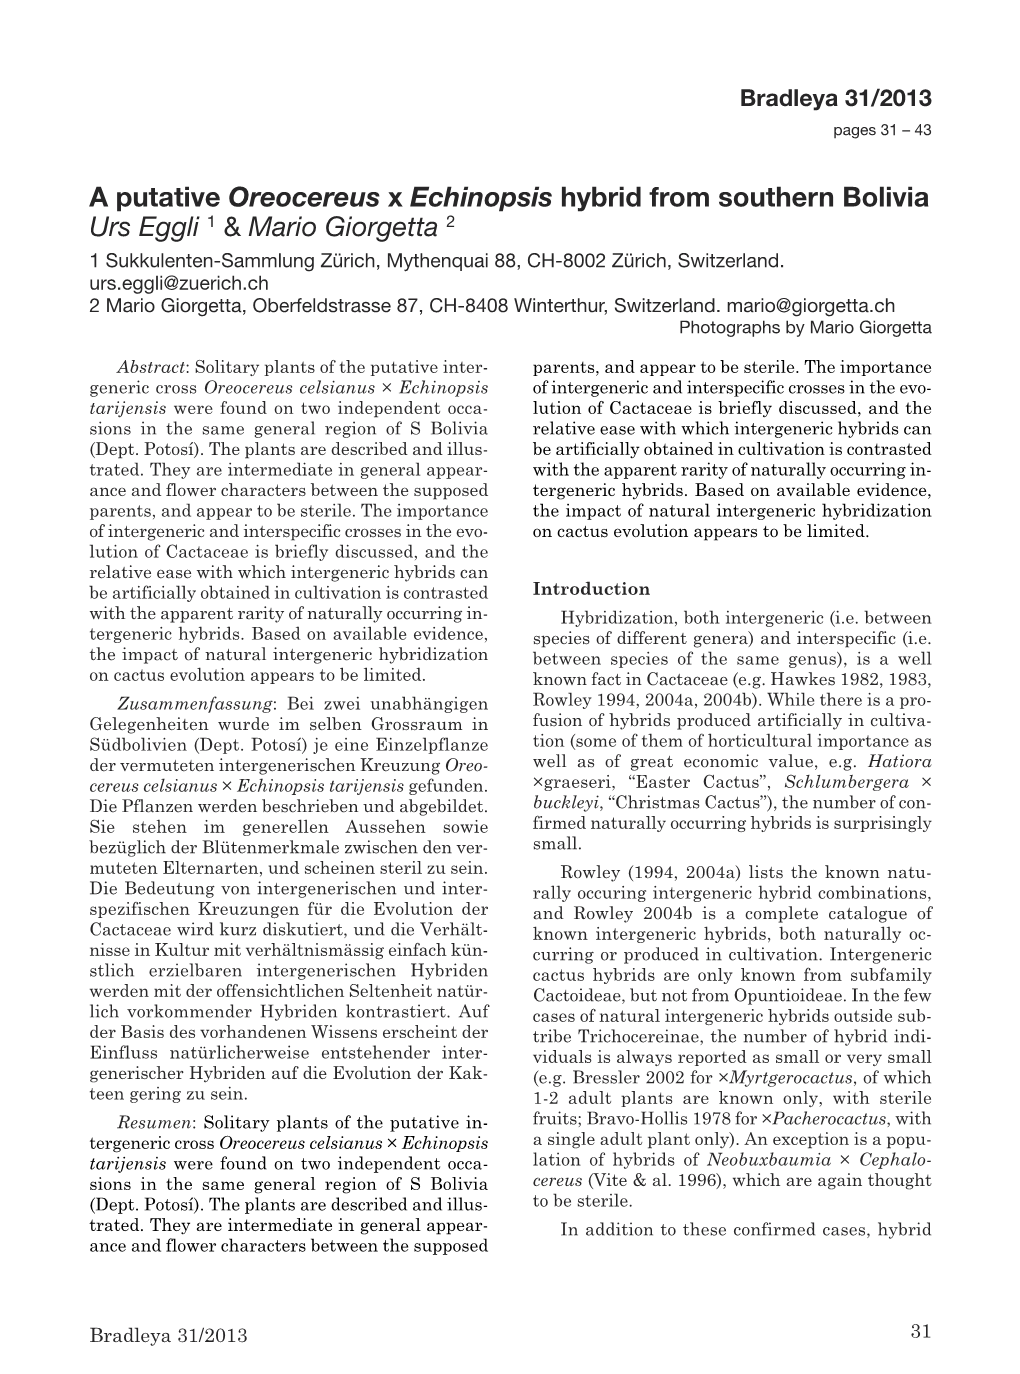 A Putative Oreocereus X Echinopsis Hybrid from Southern Bolivia